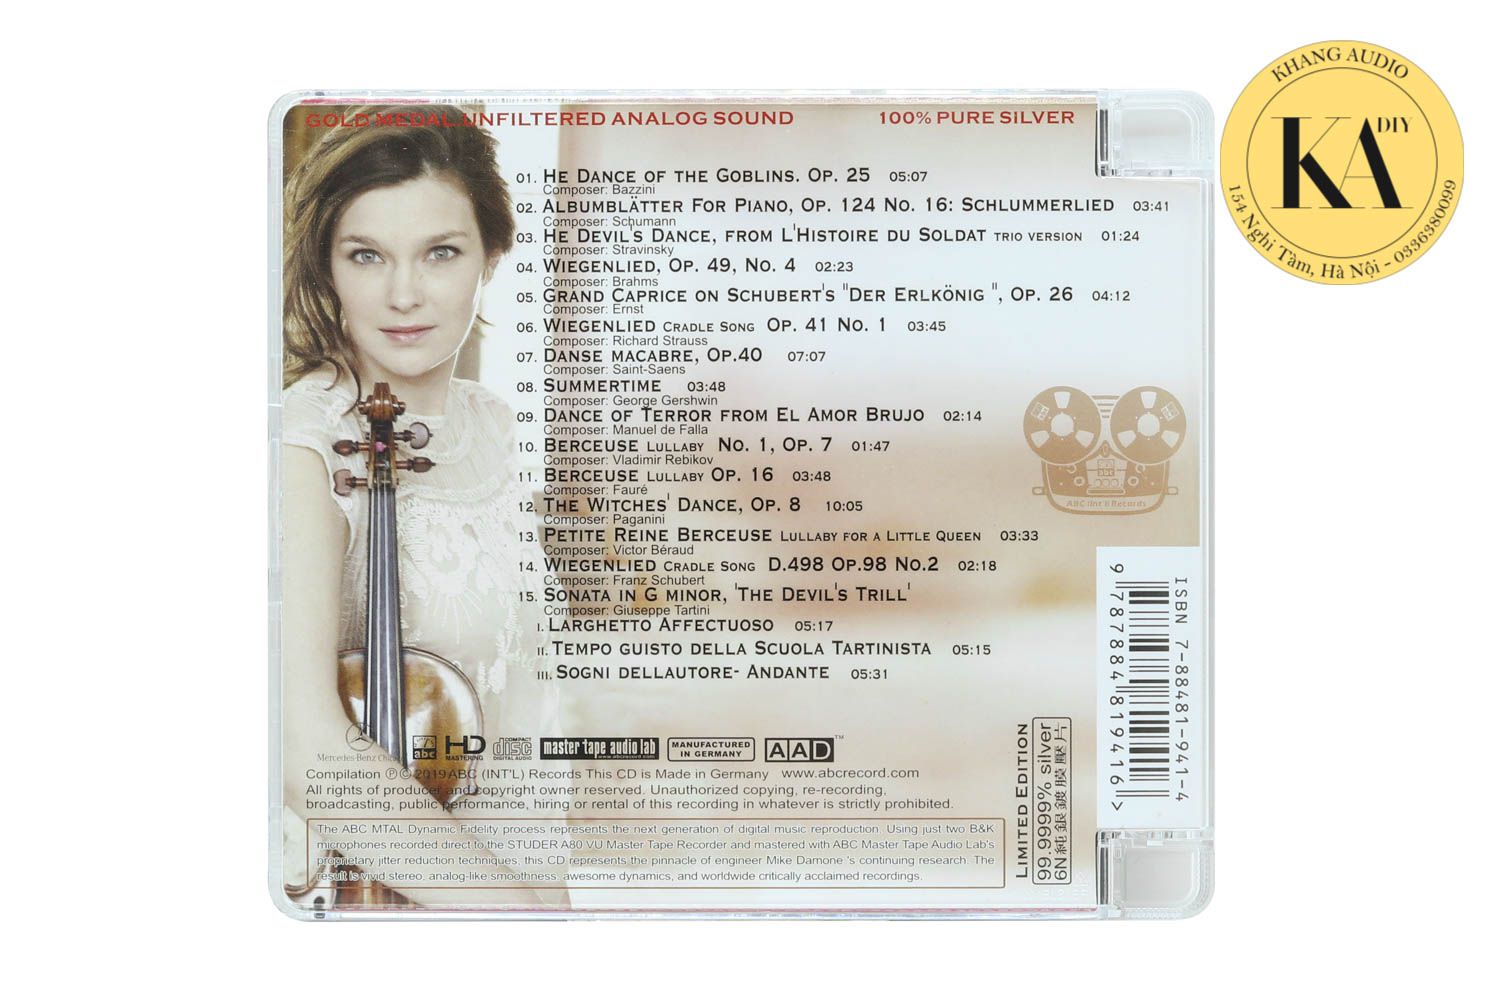 The Most Beautiful Violin - Original Analog Master Tape Khang Audio 0336380099